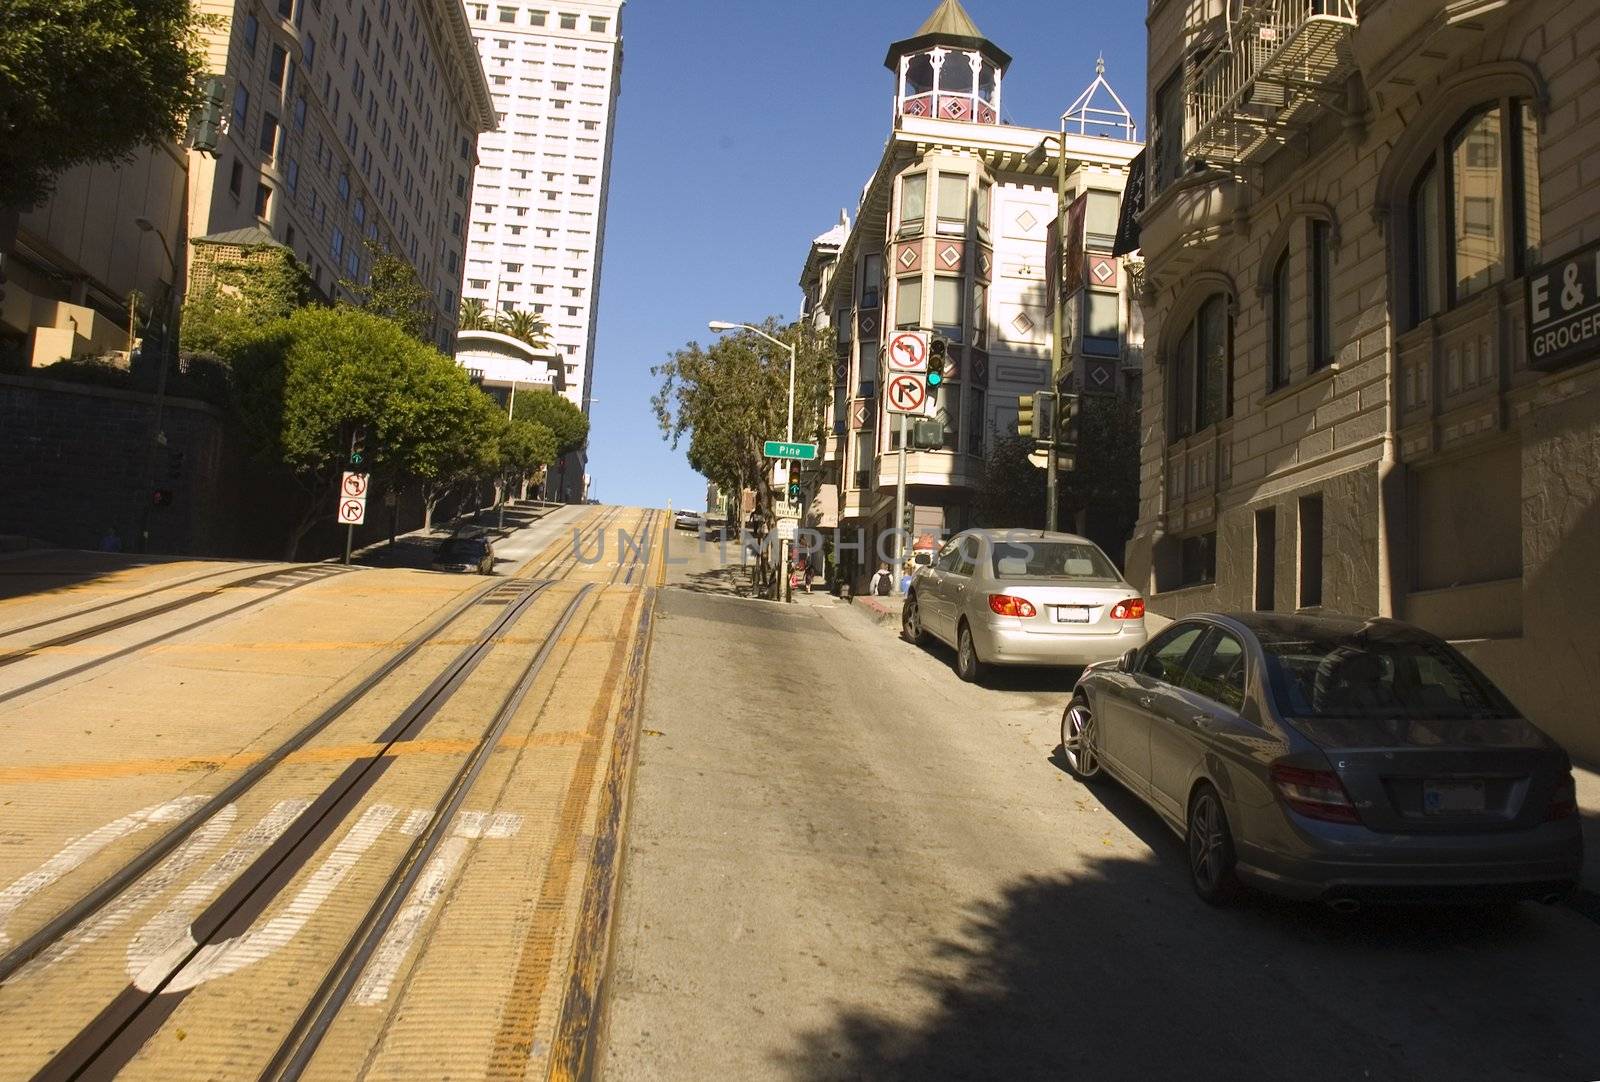 Trolley tracks in San Francisco by jeffbanke